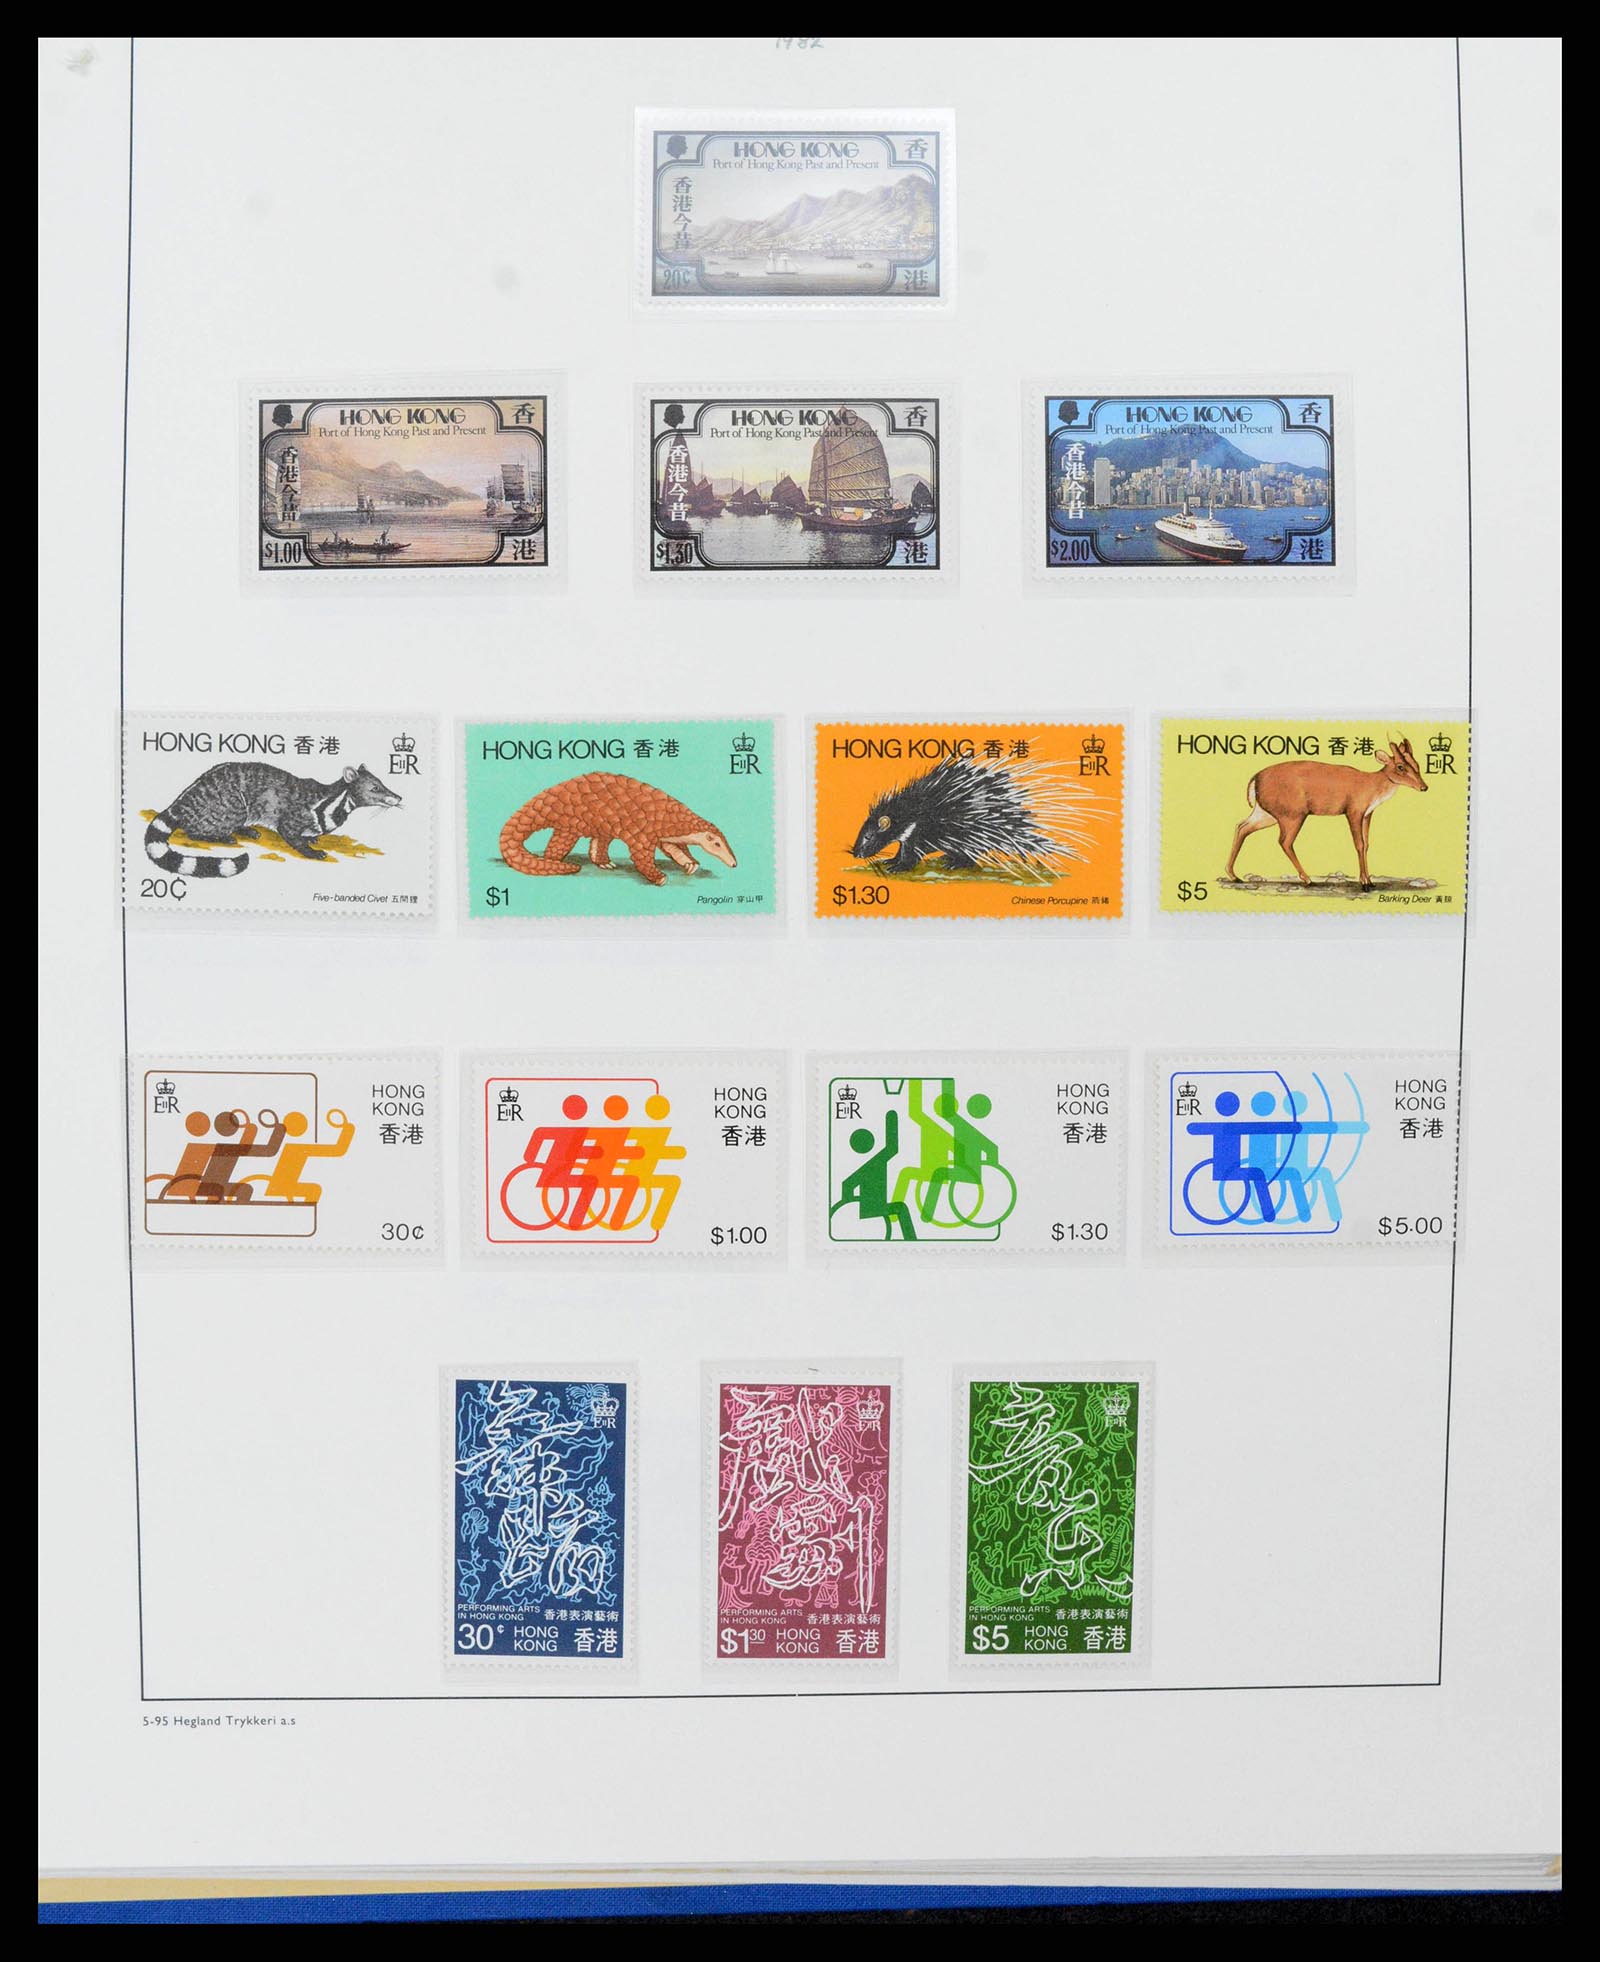 37955 0079 - Stamp collection 37955 Hong Kong supercollection 1862-2007.